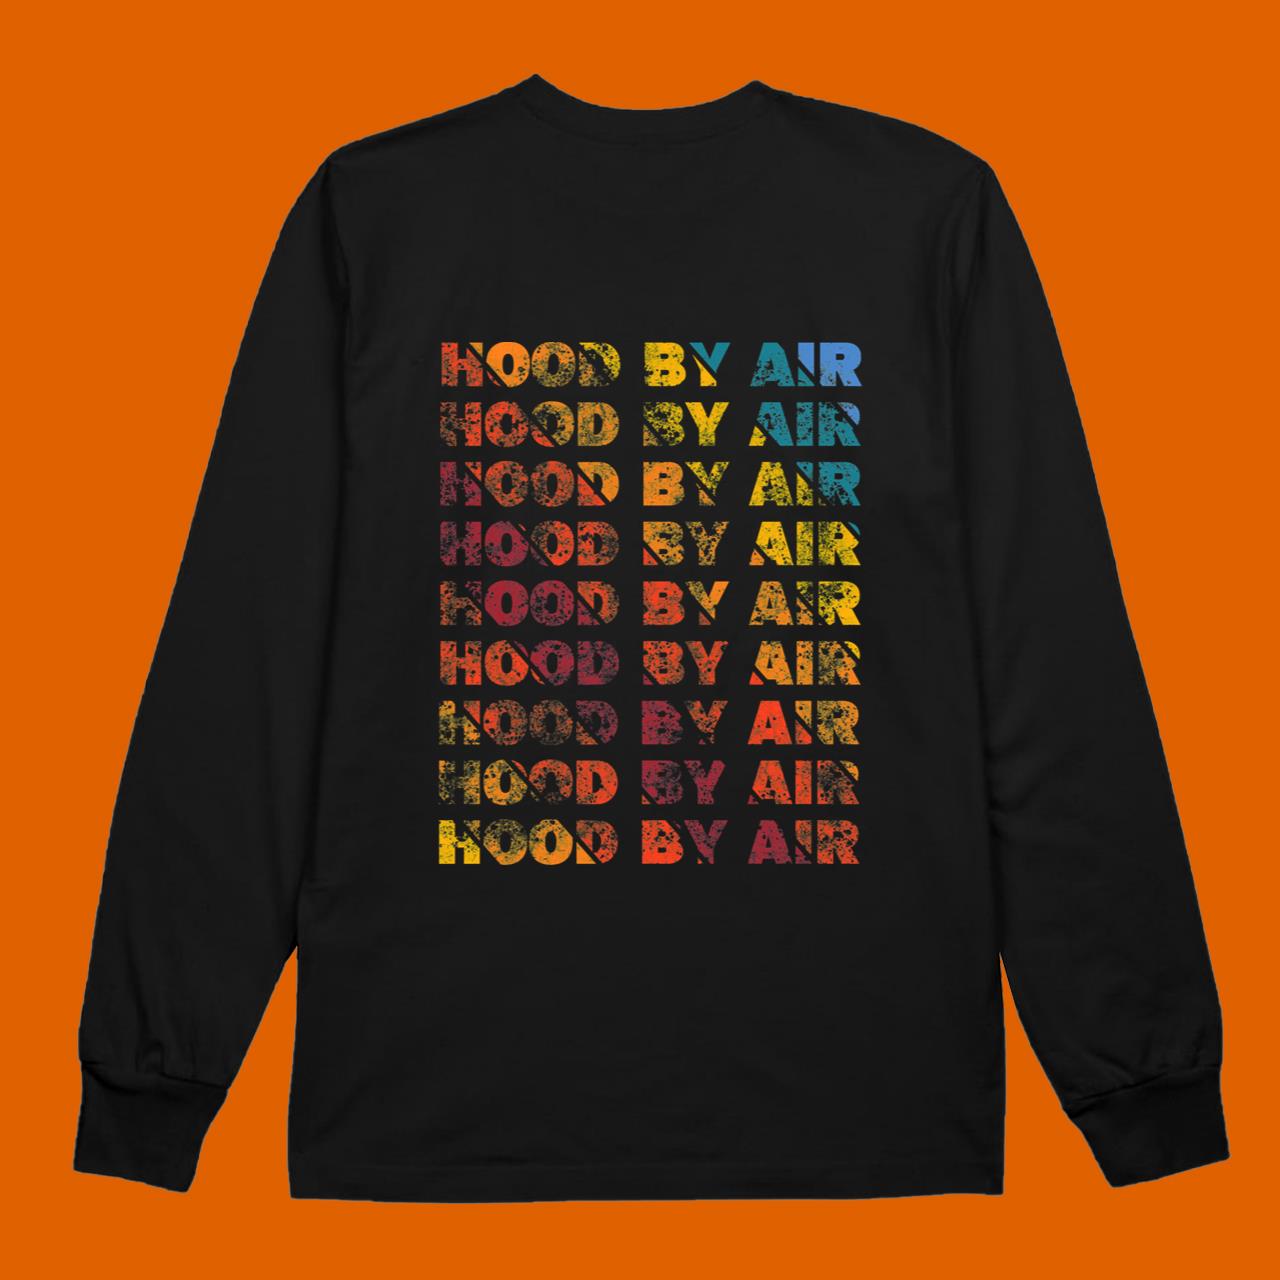 Retro Hood By Air Essential T-Shirt